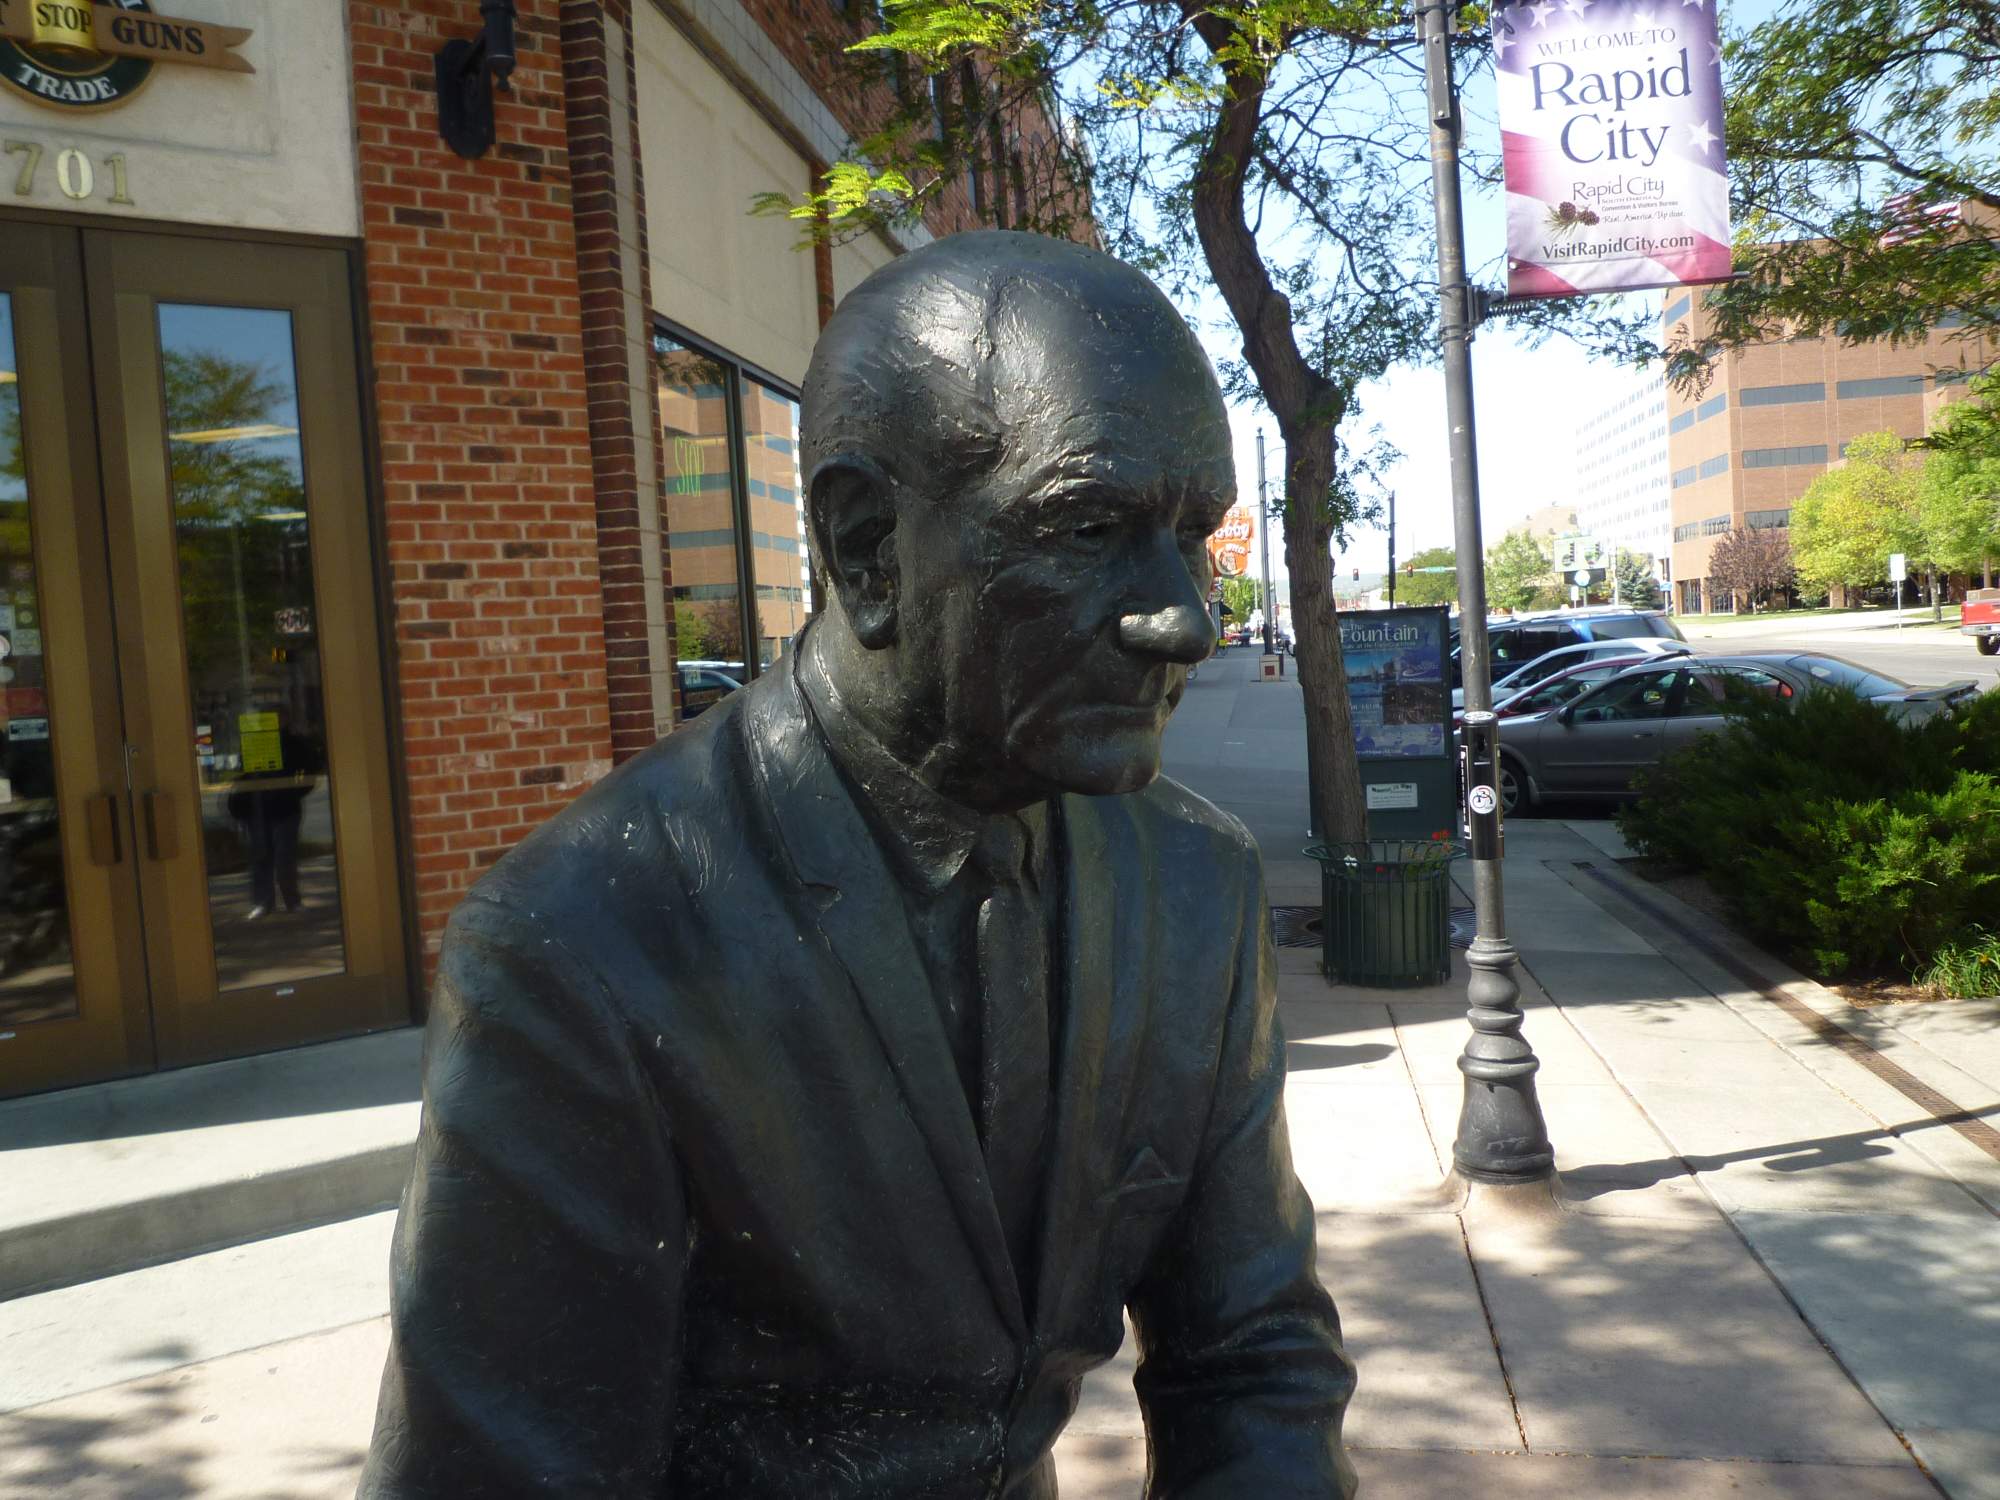 Lyndon B. Johnson statue in Rapid City